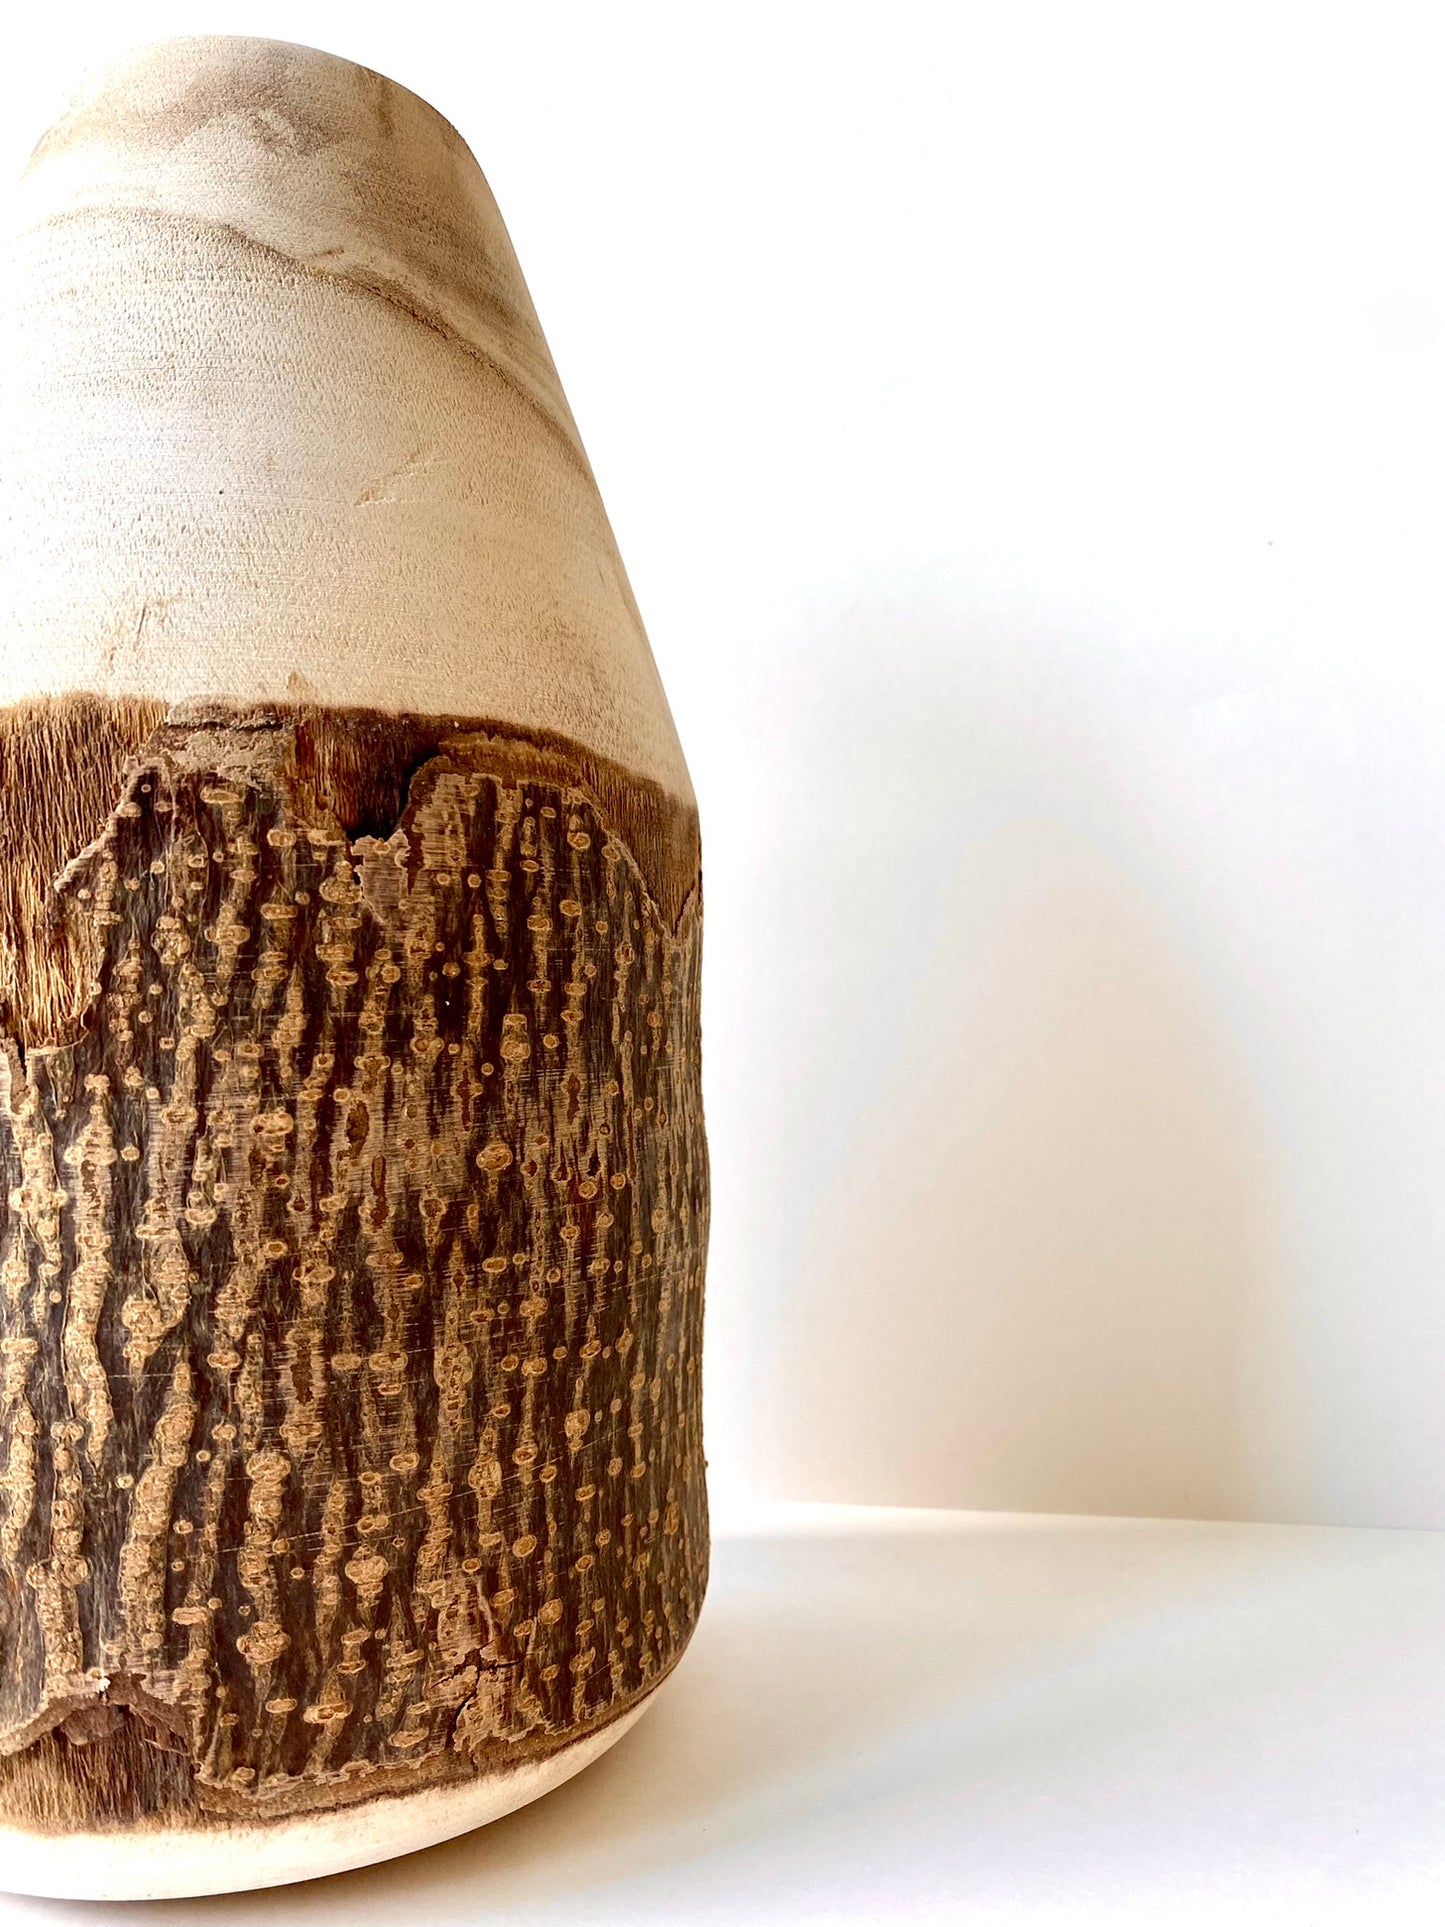 paulownia wood vase with live edge